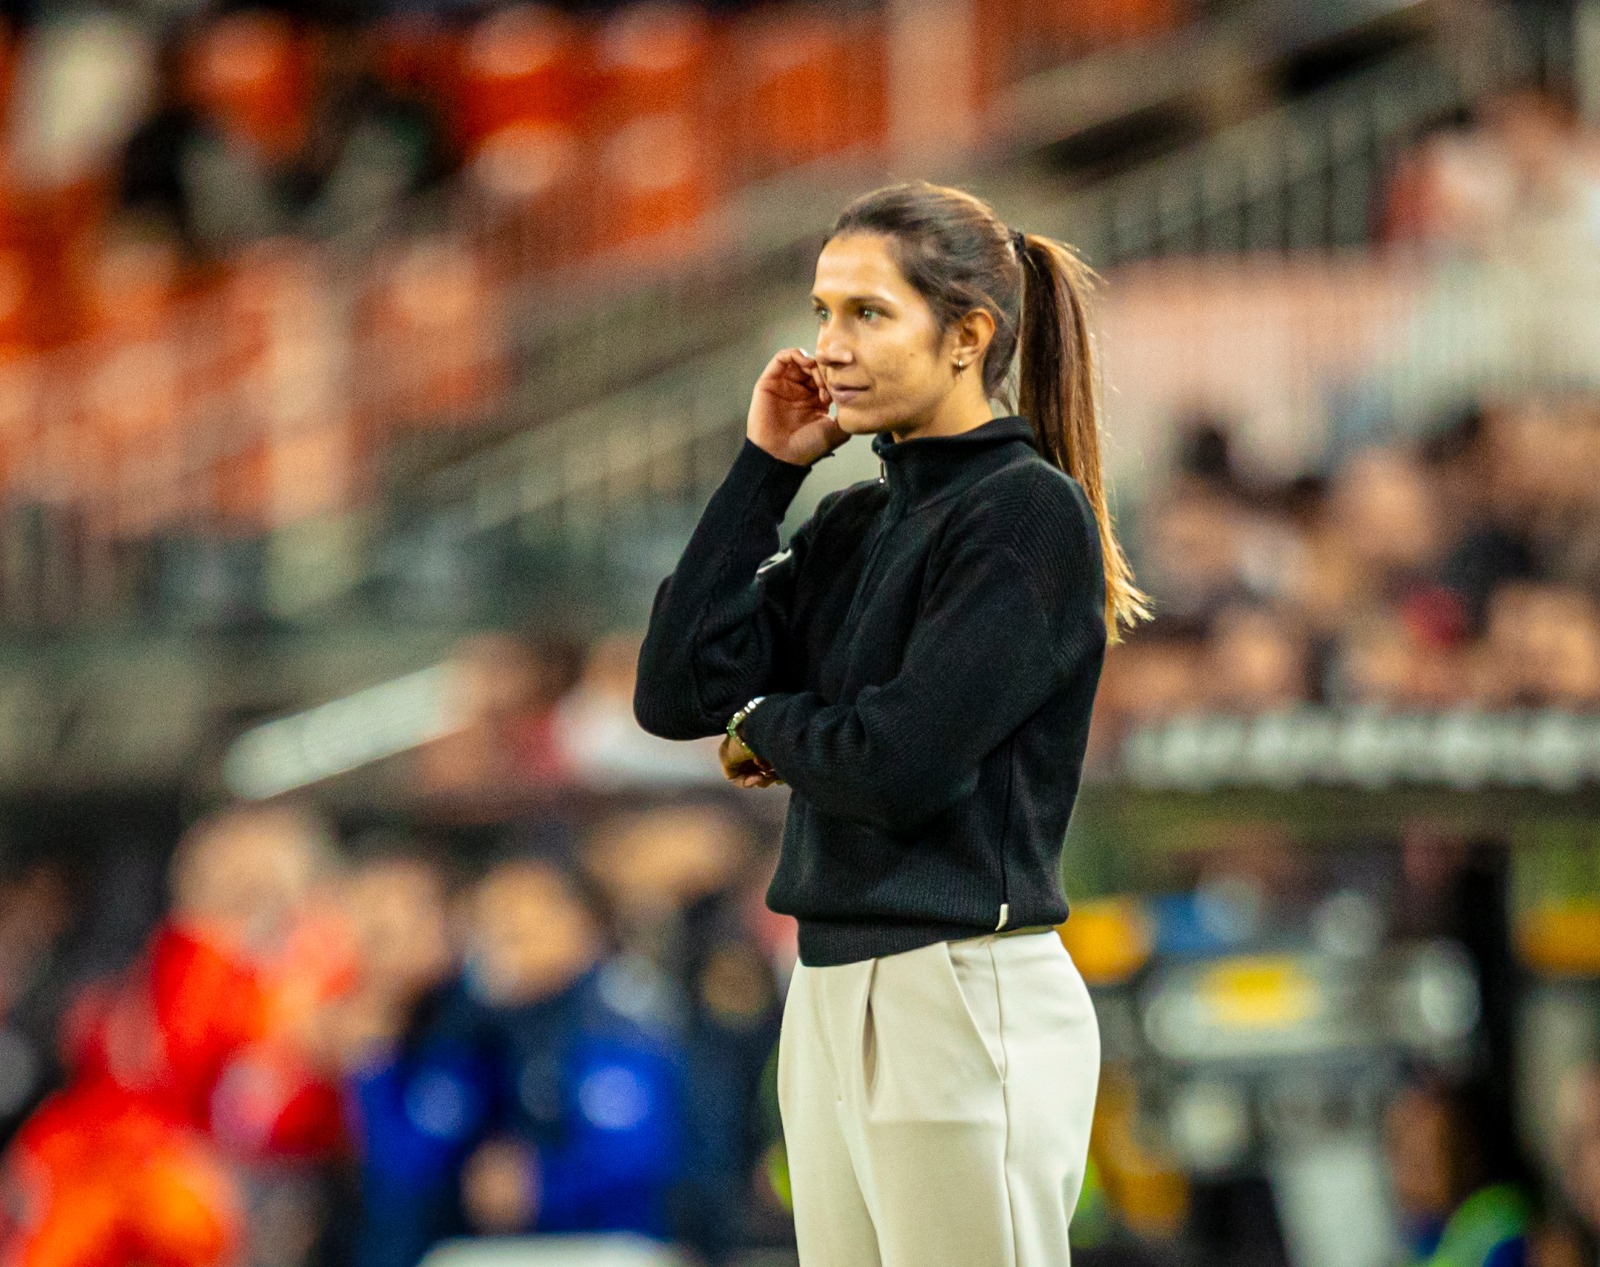 Entrevista a Andrea Esteban, ex entrenadora del Valencia CF Femenino